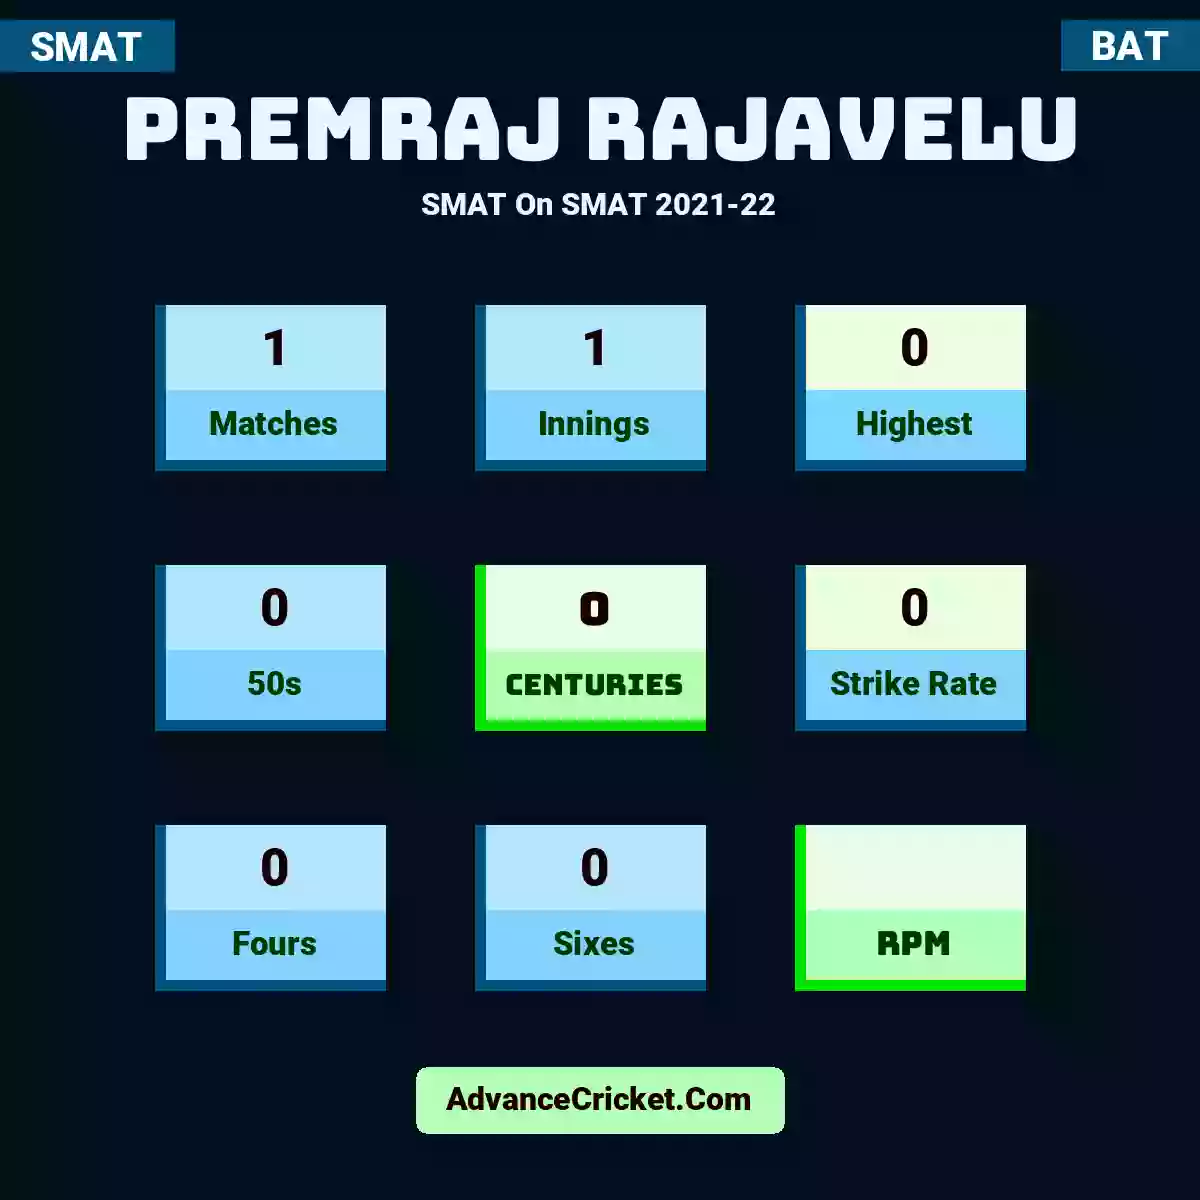 Premraj Rajavelu SMAT  On SMAT 2021-22, Premraj Rajavelu played 1 matches, scored 0 runs as highest, 0 half-centuries, and 0 centuries, with a strike rate of 0. P.Rajavelu hit 0 fours and 0 sixes.